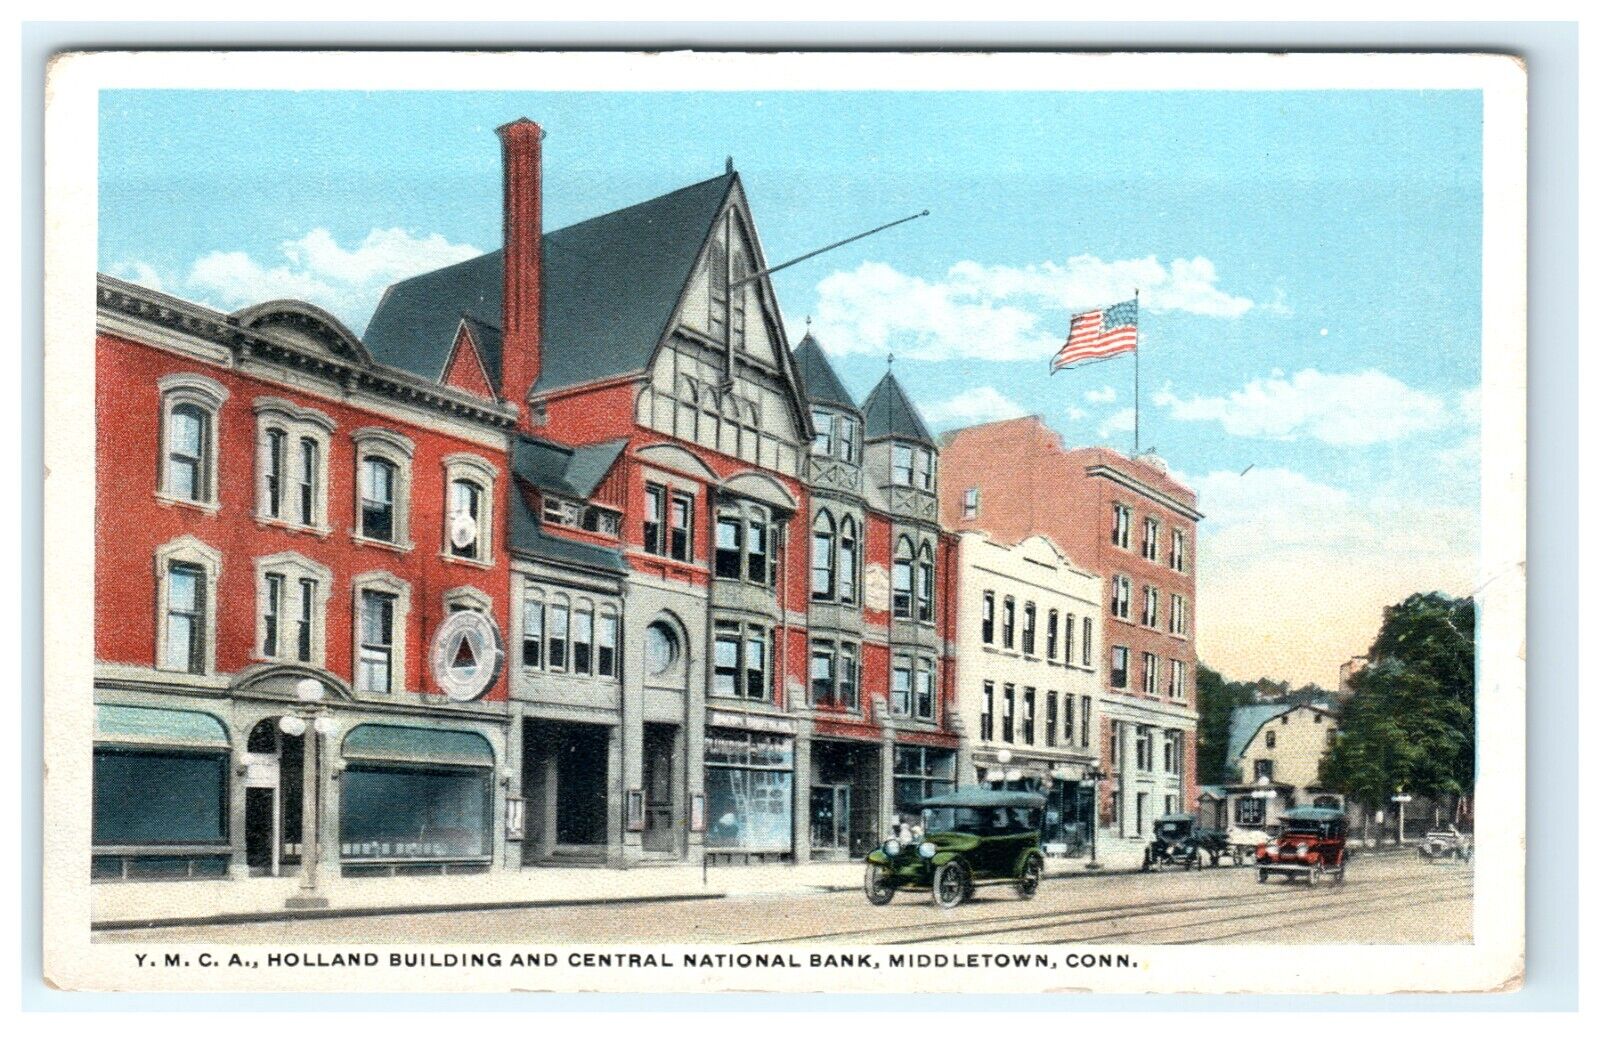 c 1922 YMCA Holland Building & Central National Bank Middletown C T - Torn